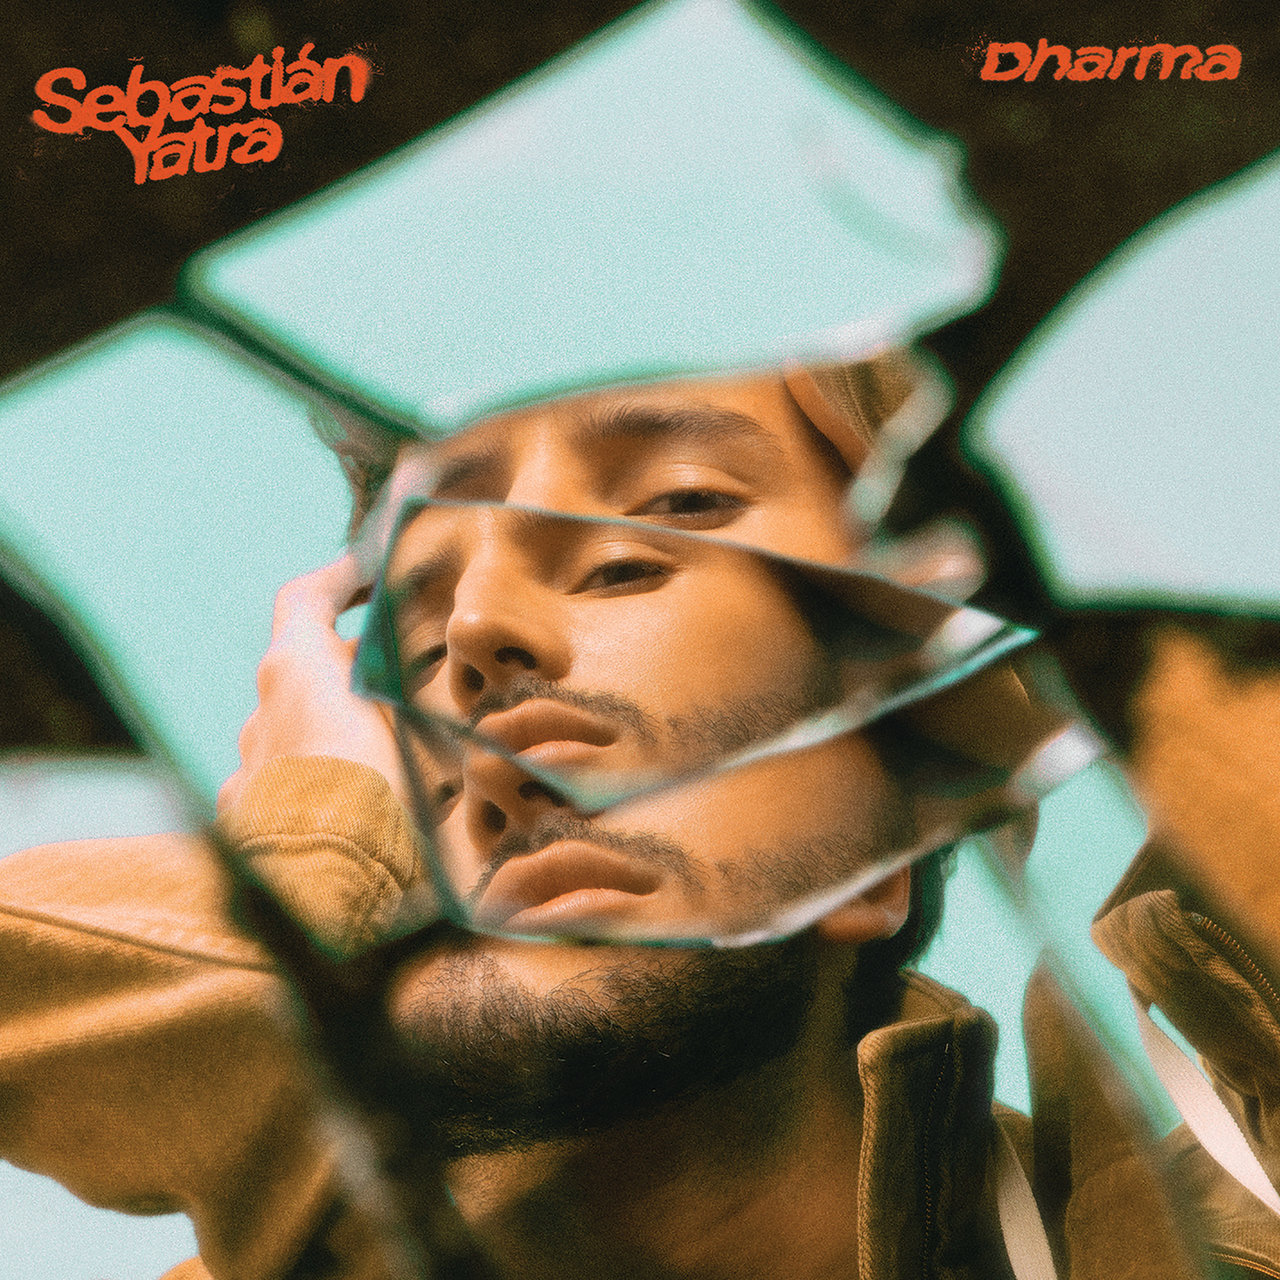 Sebastián Yatra featuring Rosario & Jorge Celedón — Dharma cover artwork